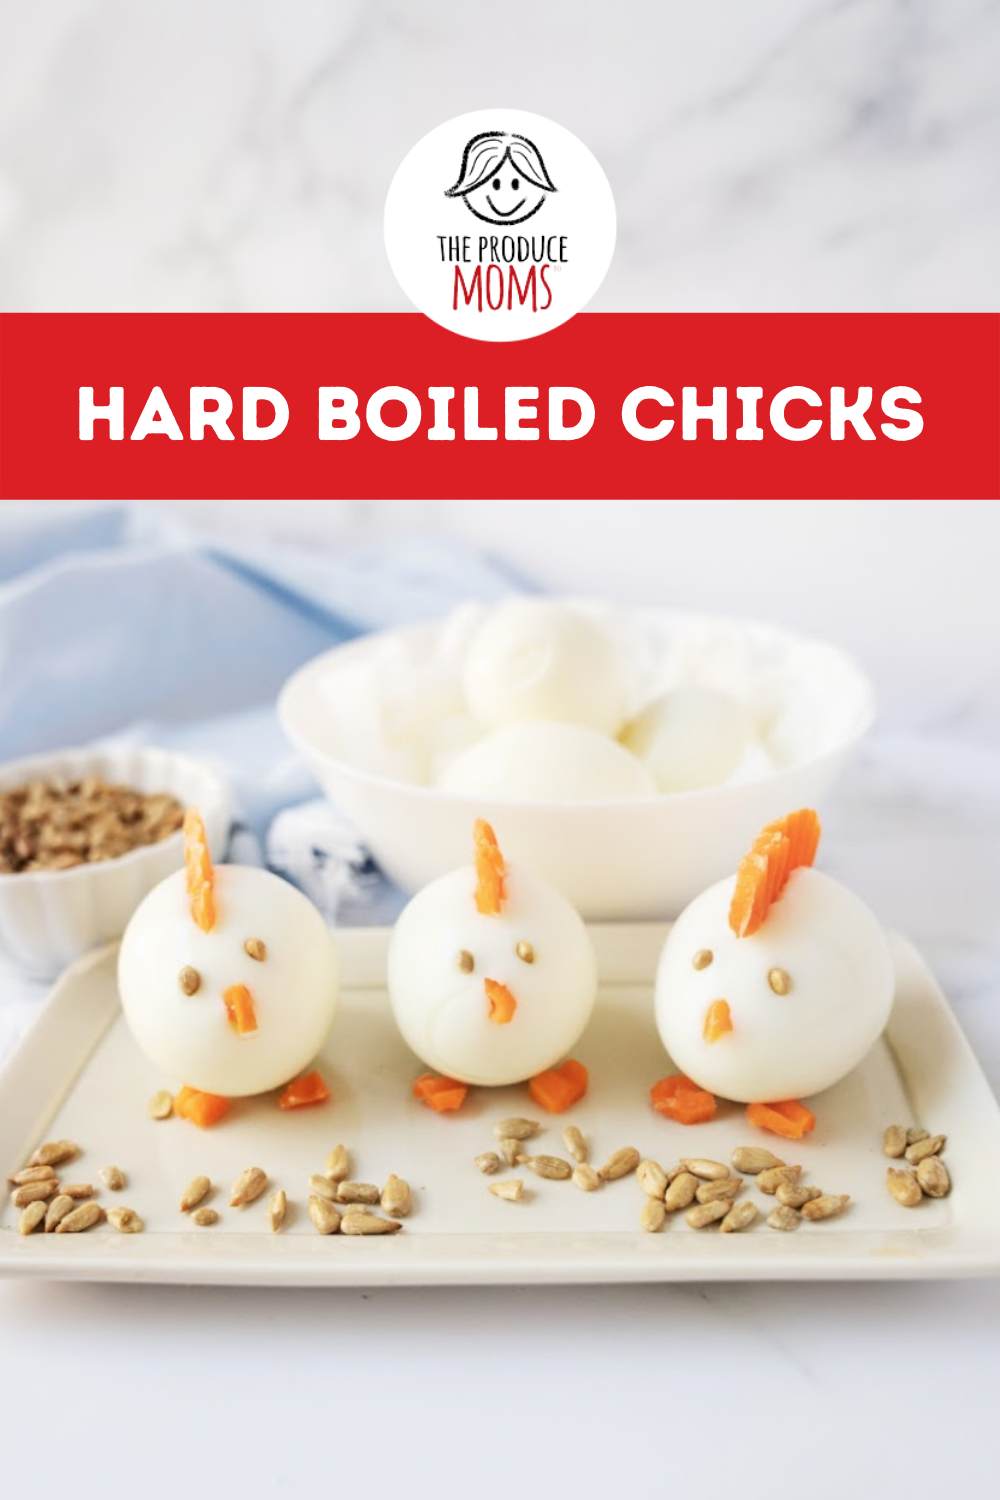 Pinterest Pin showcasing Hard Boiled Chicks